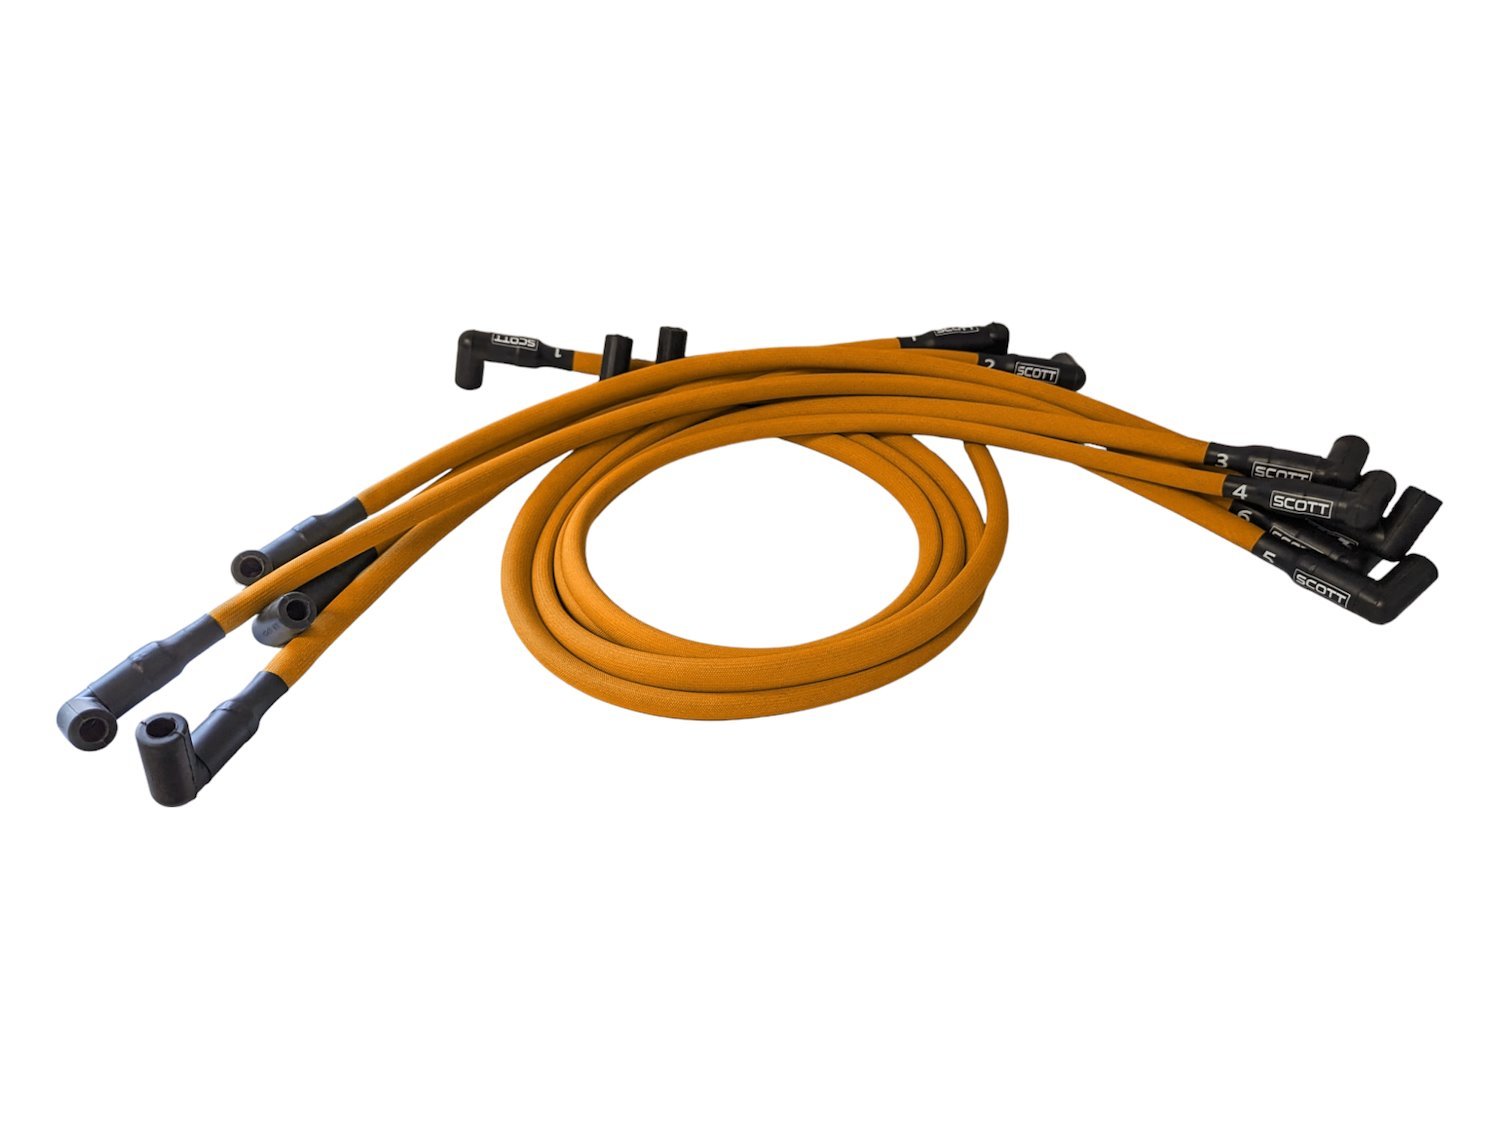 SPW-PS-530-6 High-Performance Fiberglass-Oversleeved Spark Plug Wire Set for Big Block Ford Dragster, Under Header [Orange]